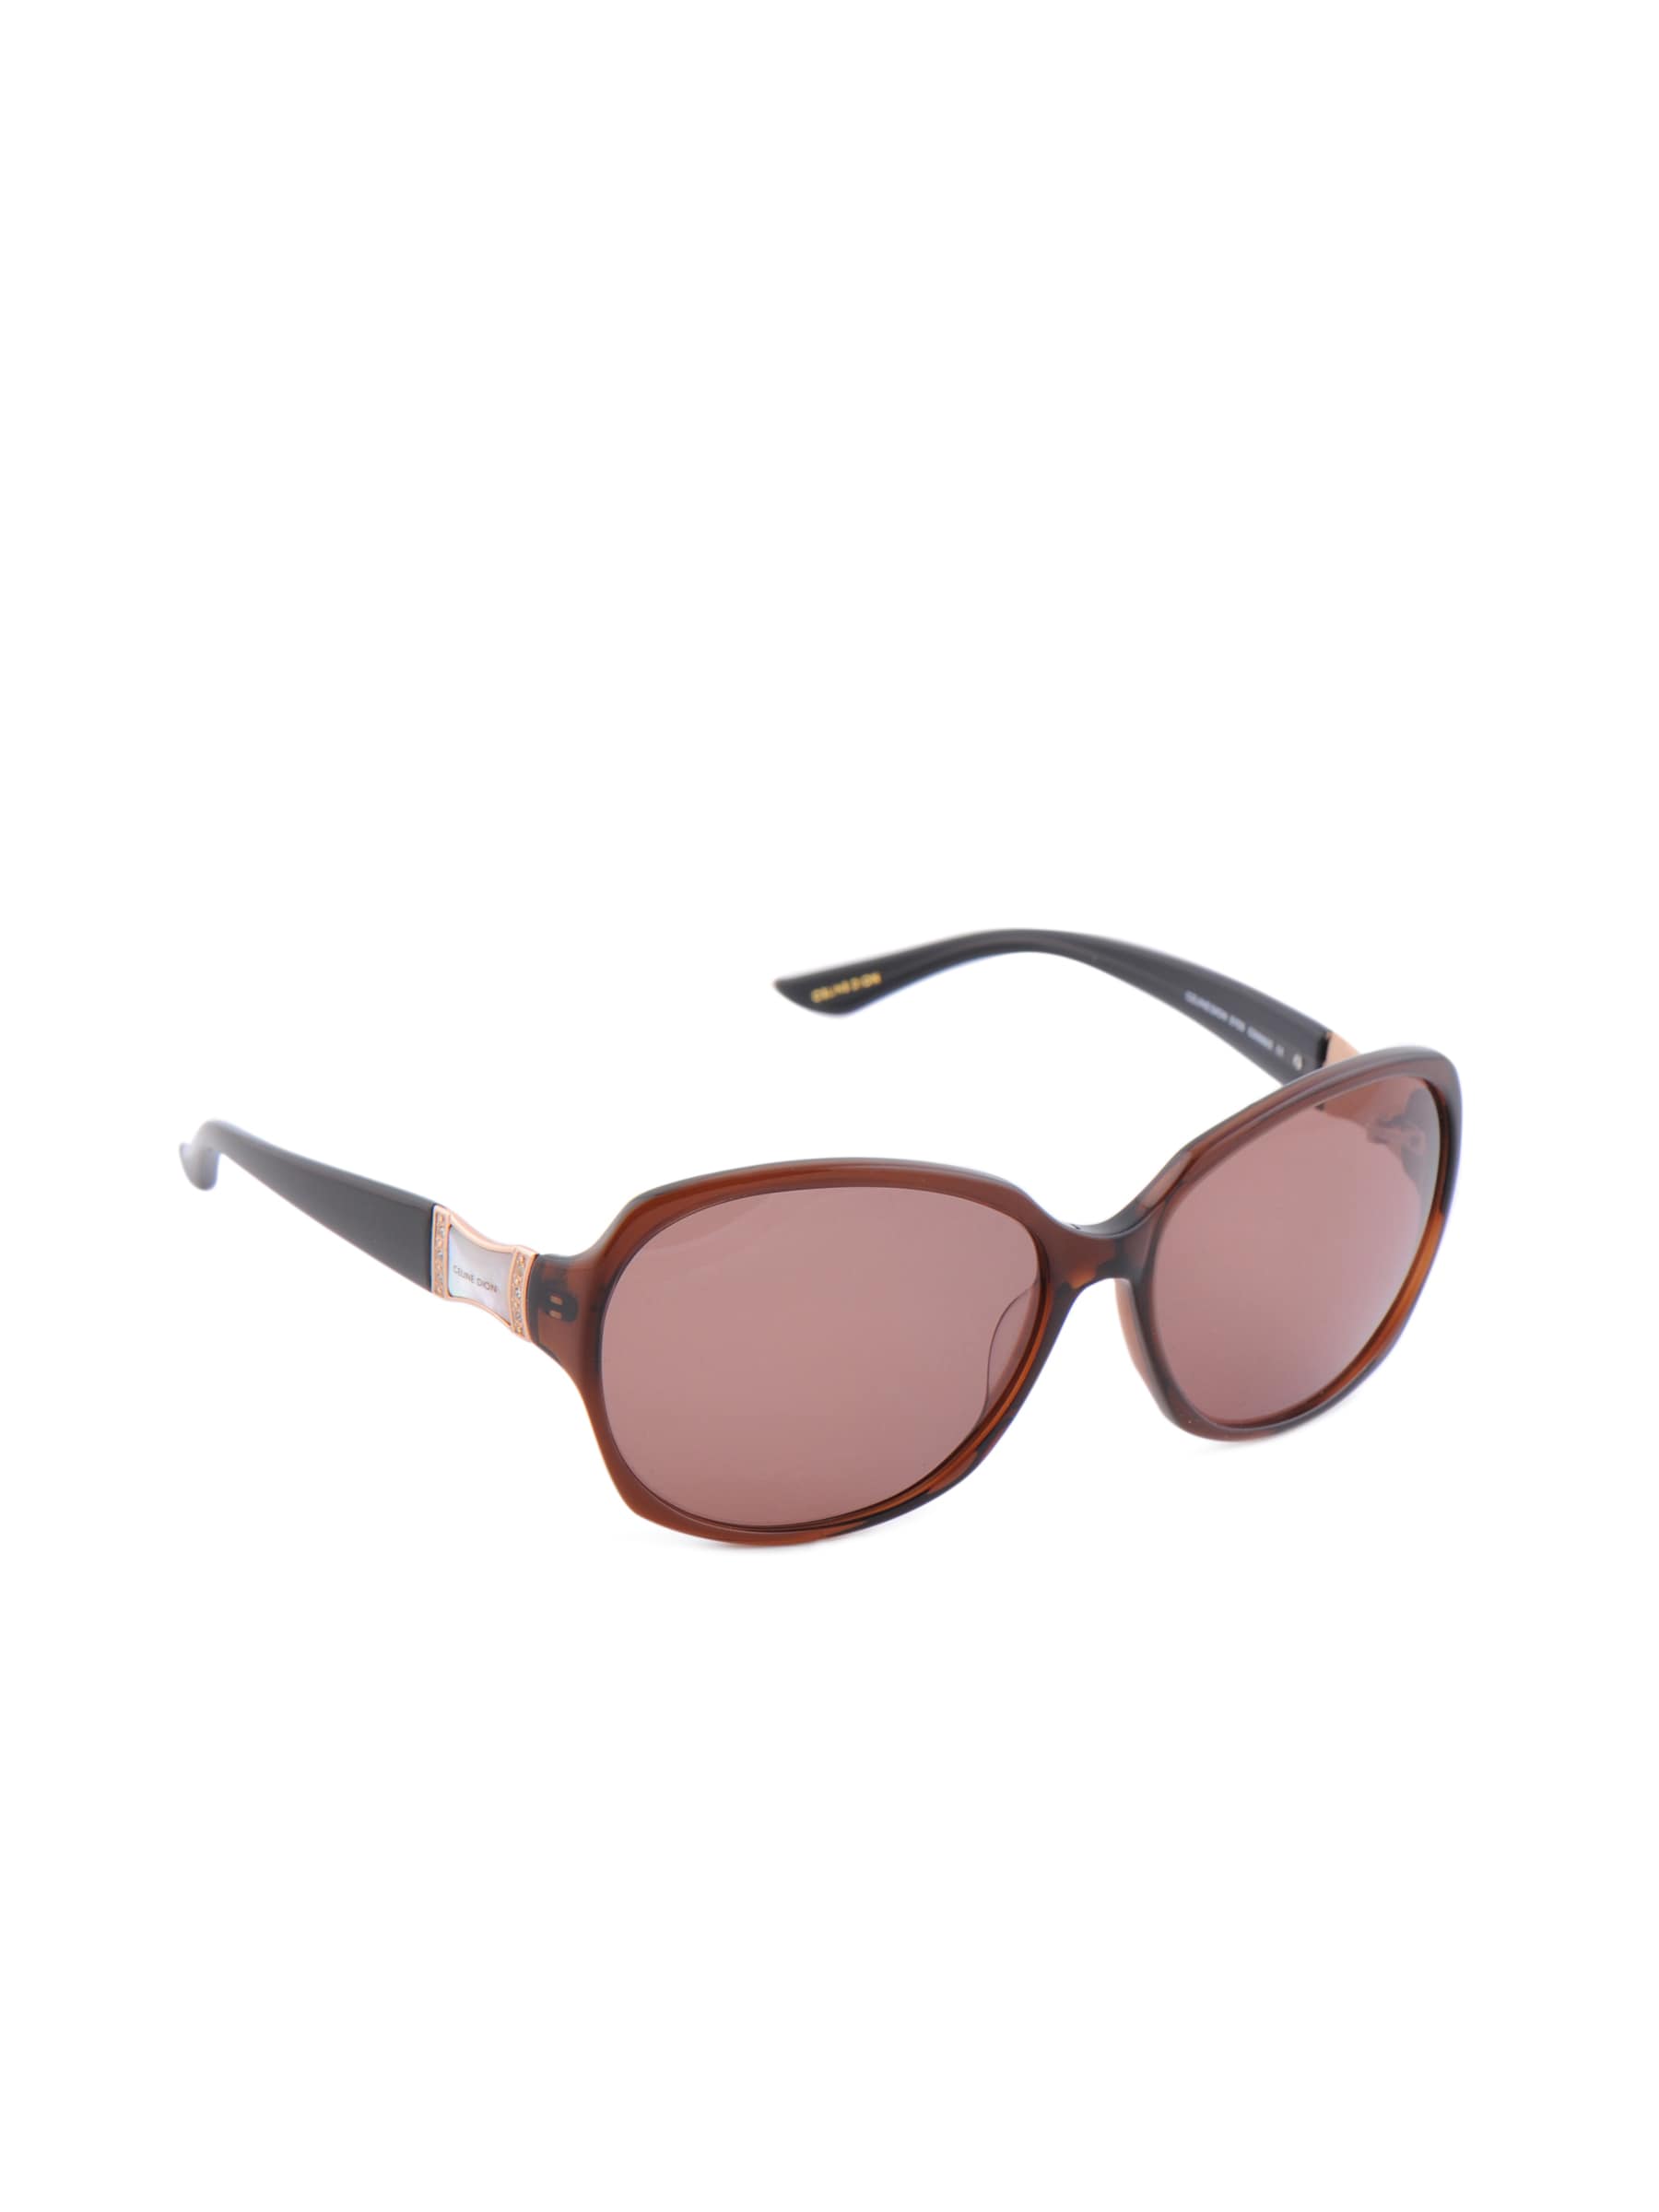 Celine Dion Women Brown Frame Sunglasses